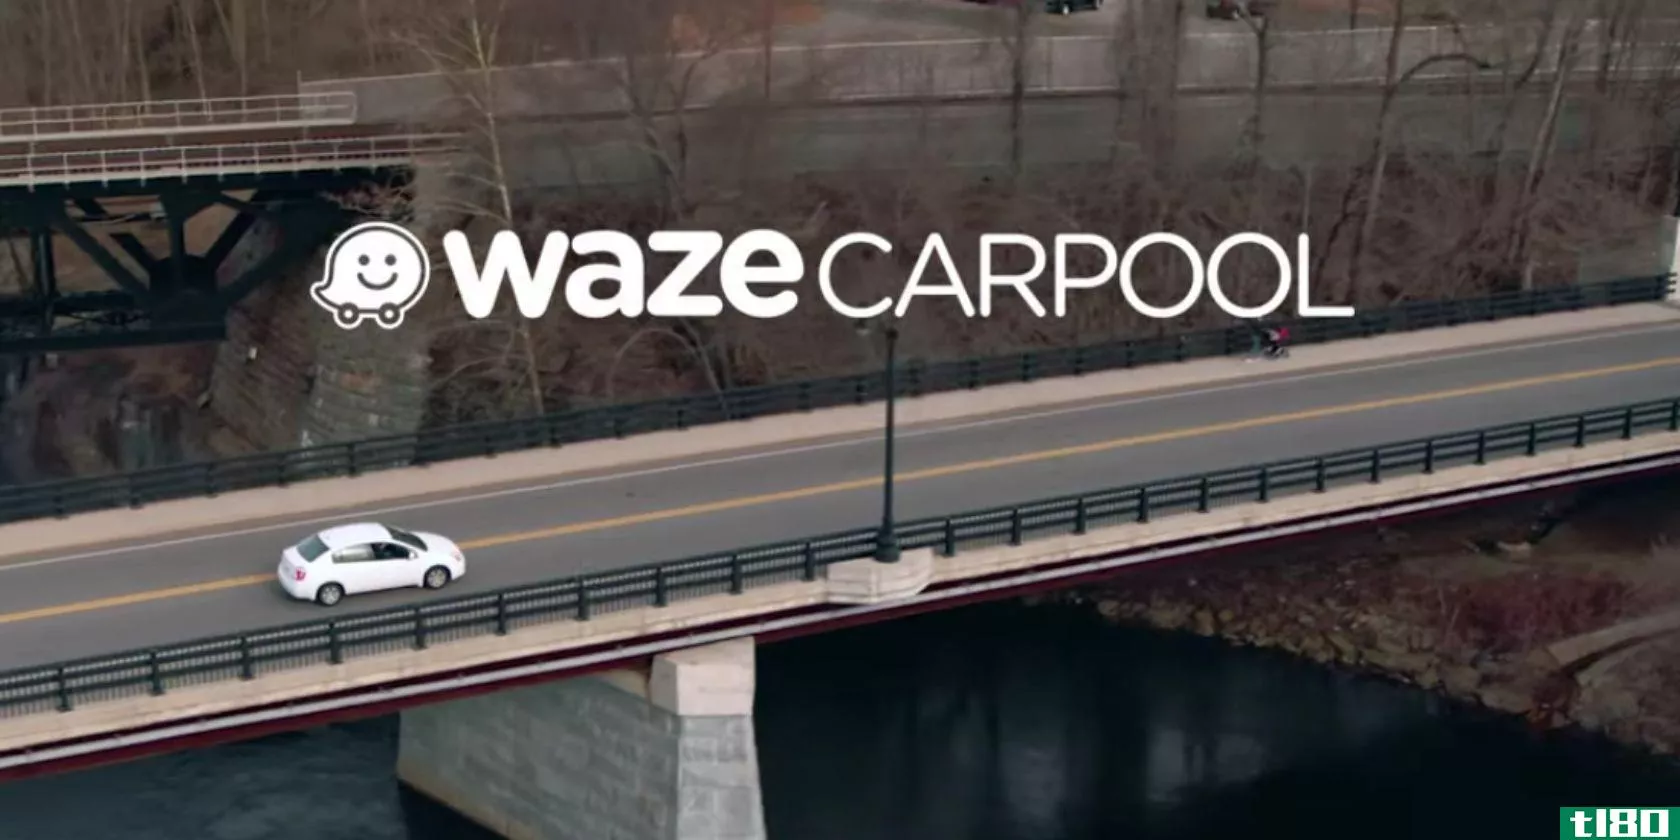 waze-carpool-logo-bridge